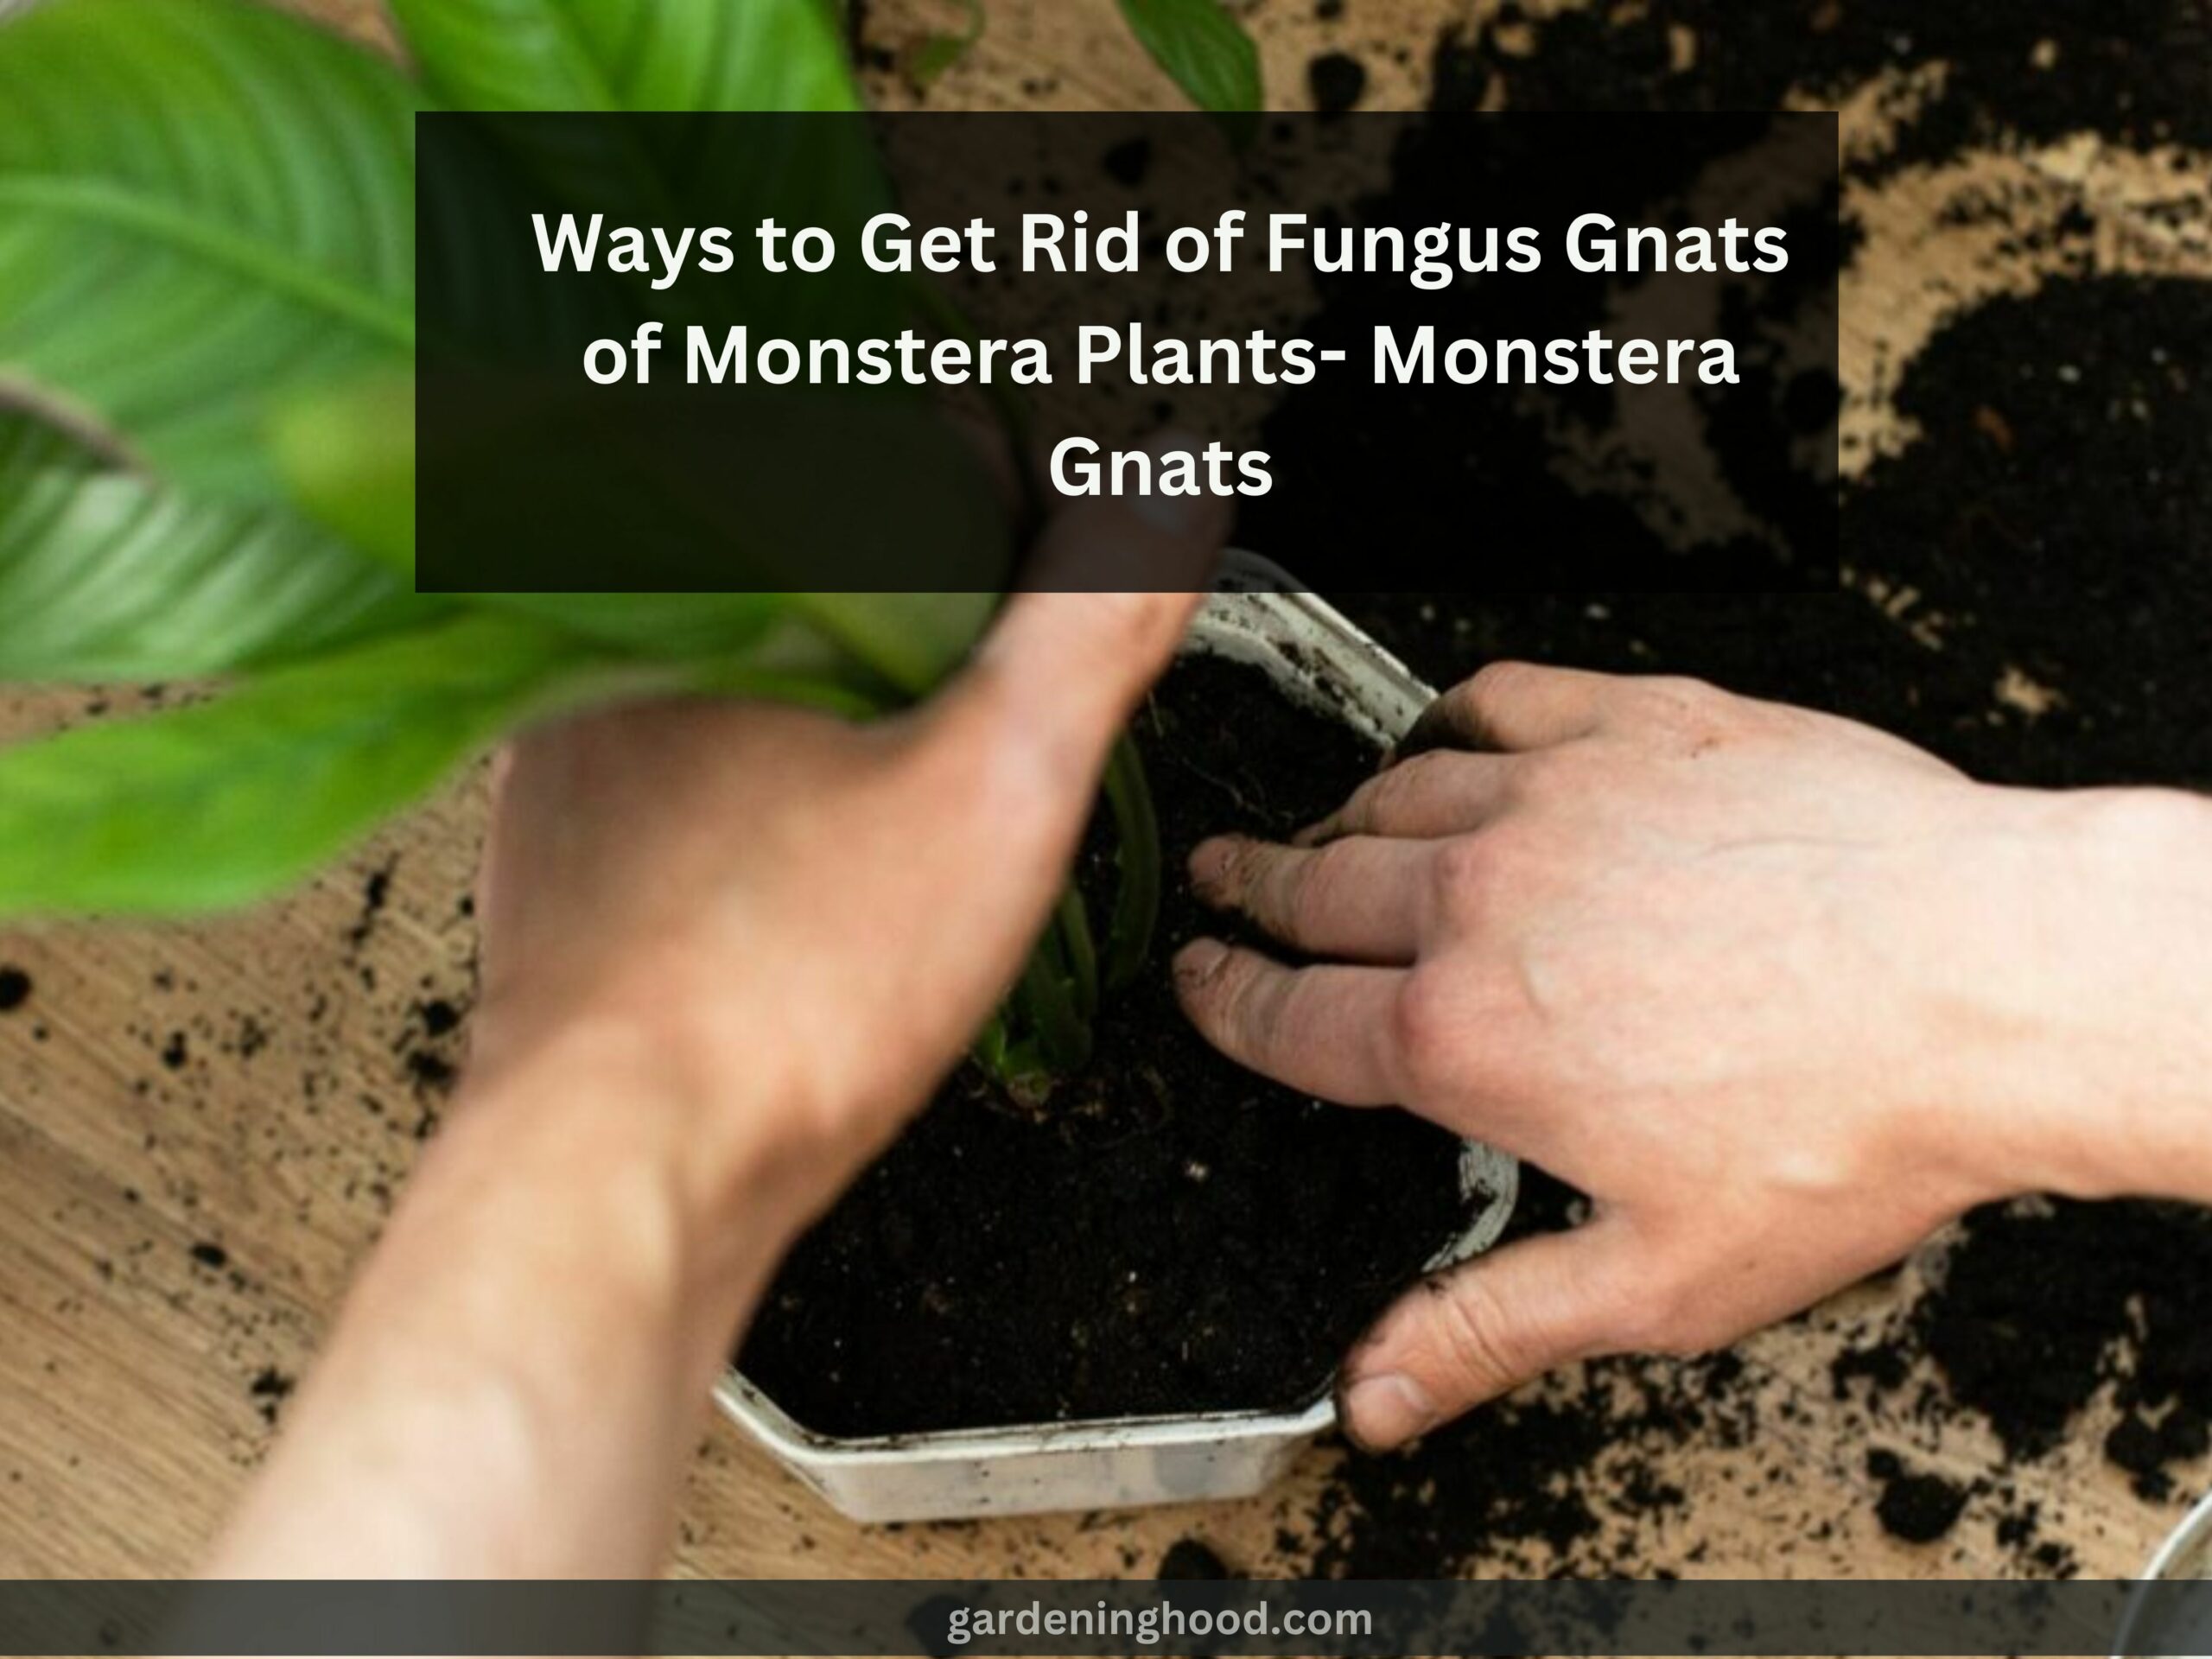 Ways to Get Rid of Fungus Gnats of Monstera Plants- Monstera Gnats